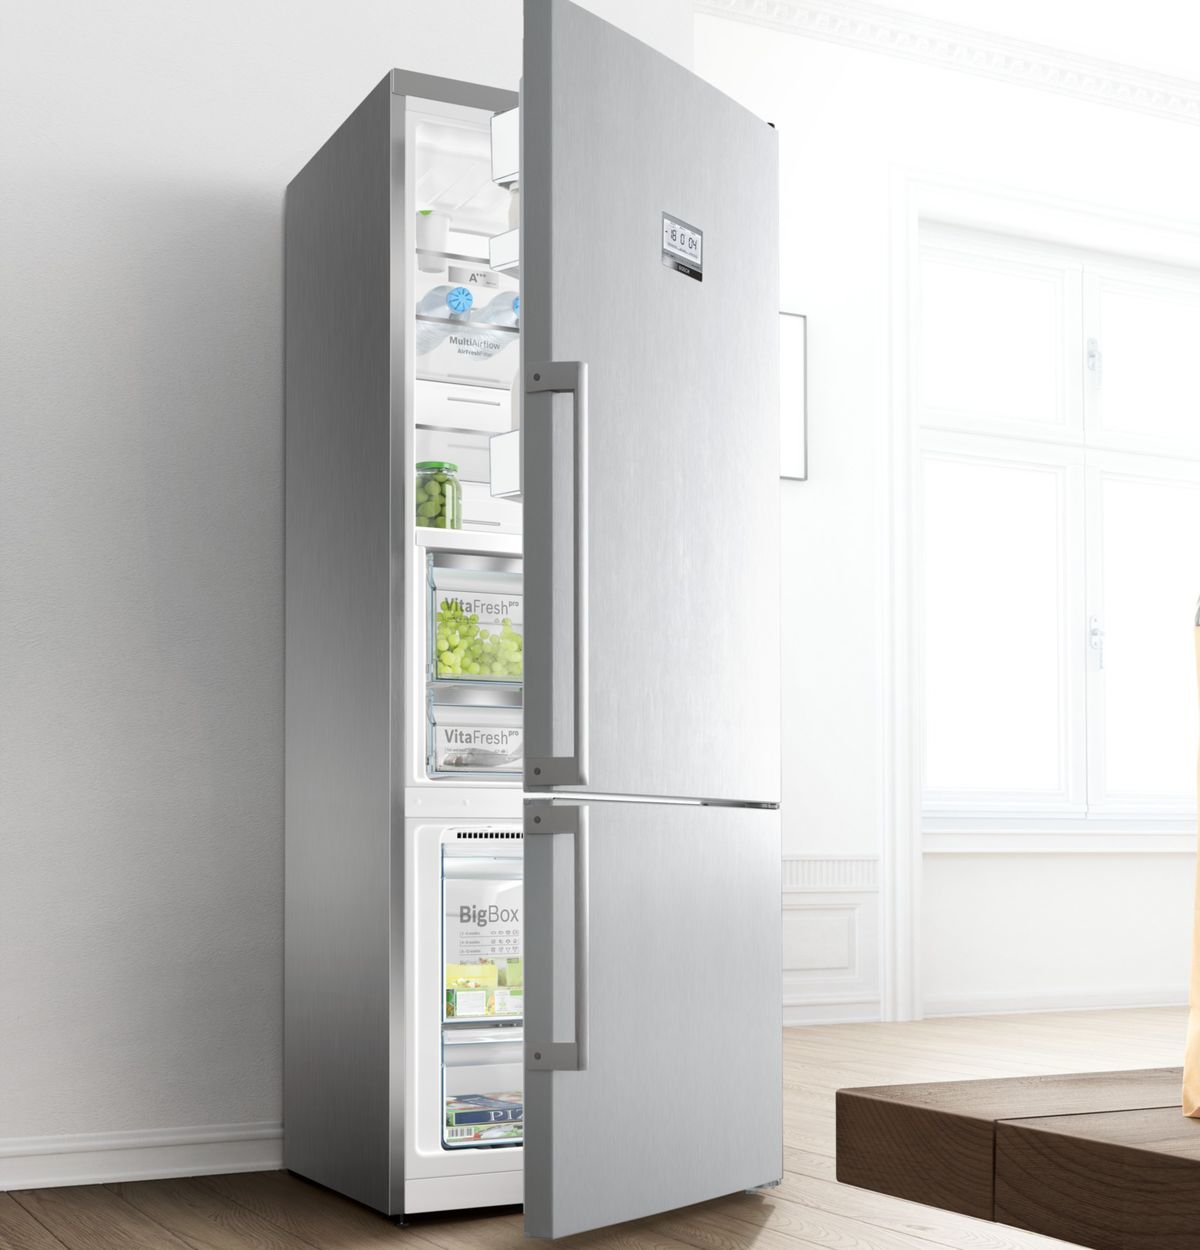 Che cosè un frigorifero modular?